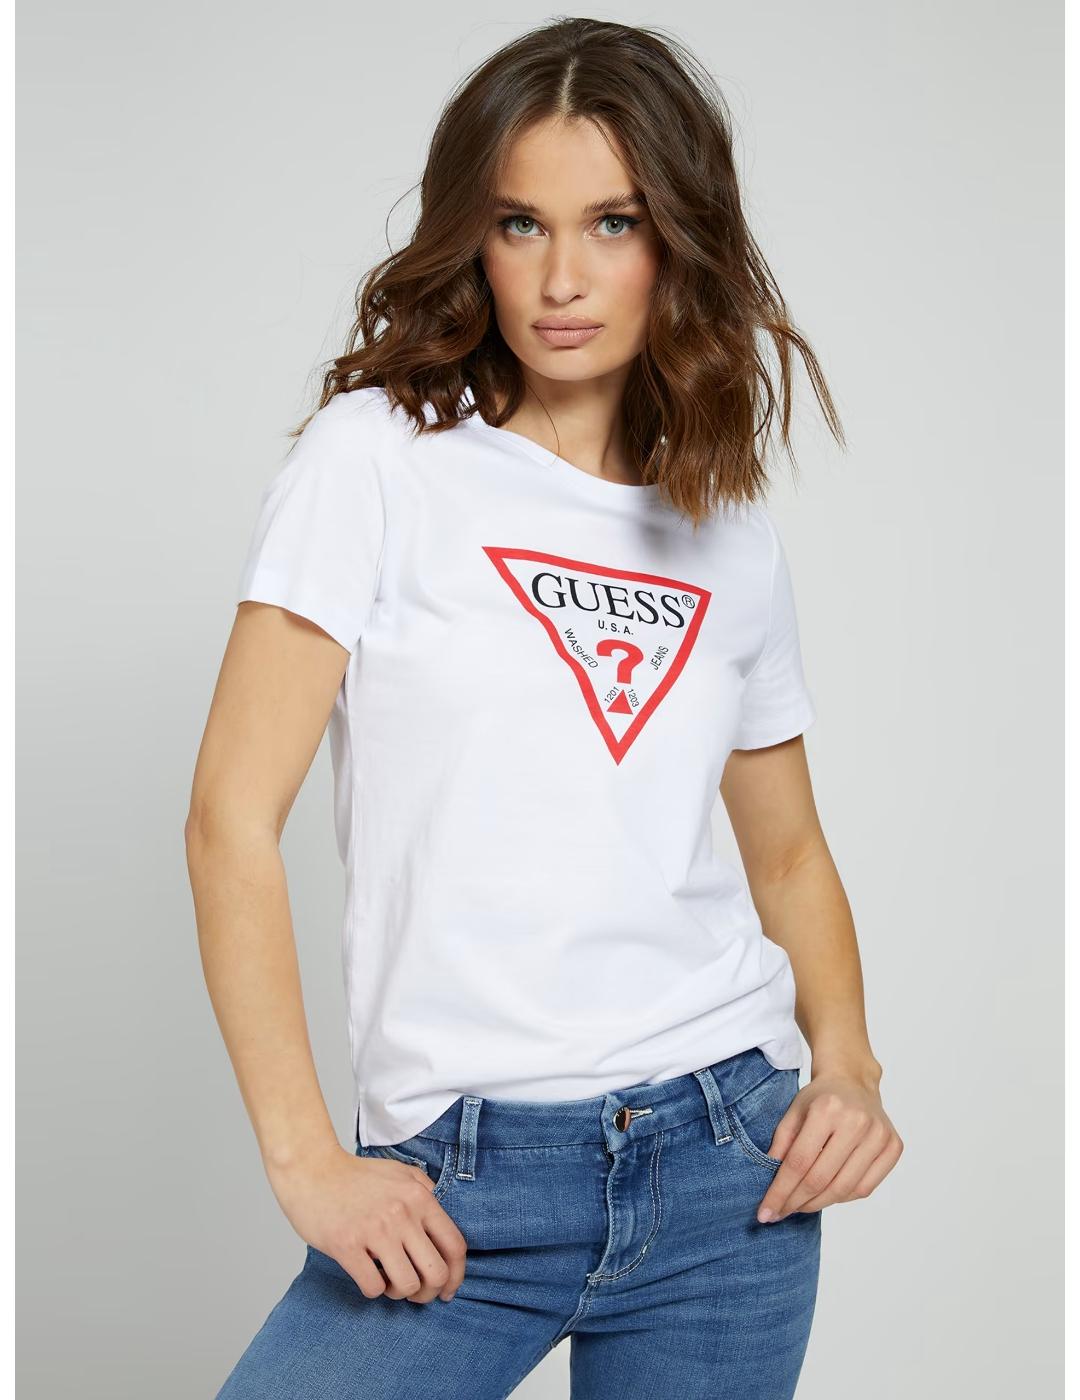 pantalla Juventud vacío Camiseta Guess Original tee blanca para mujer